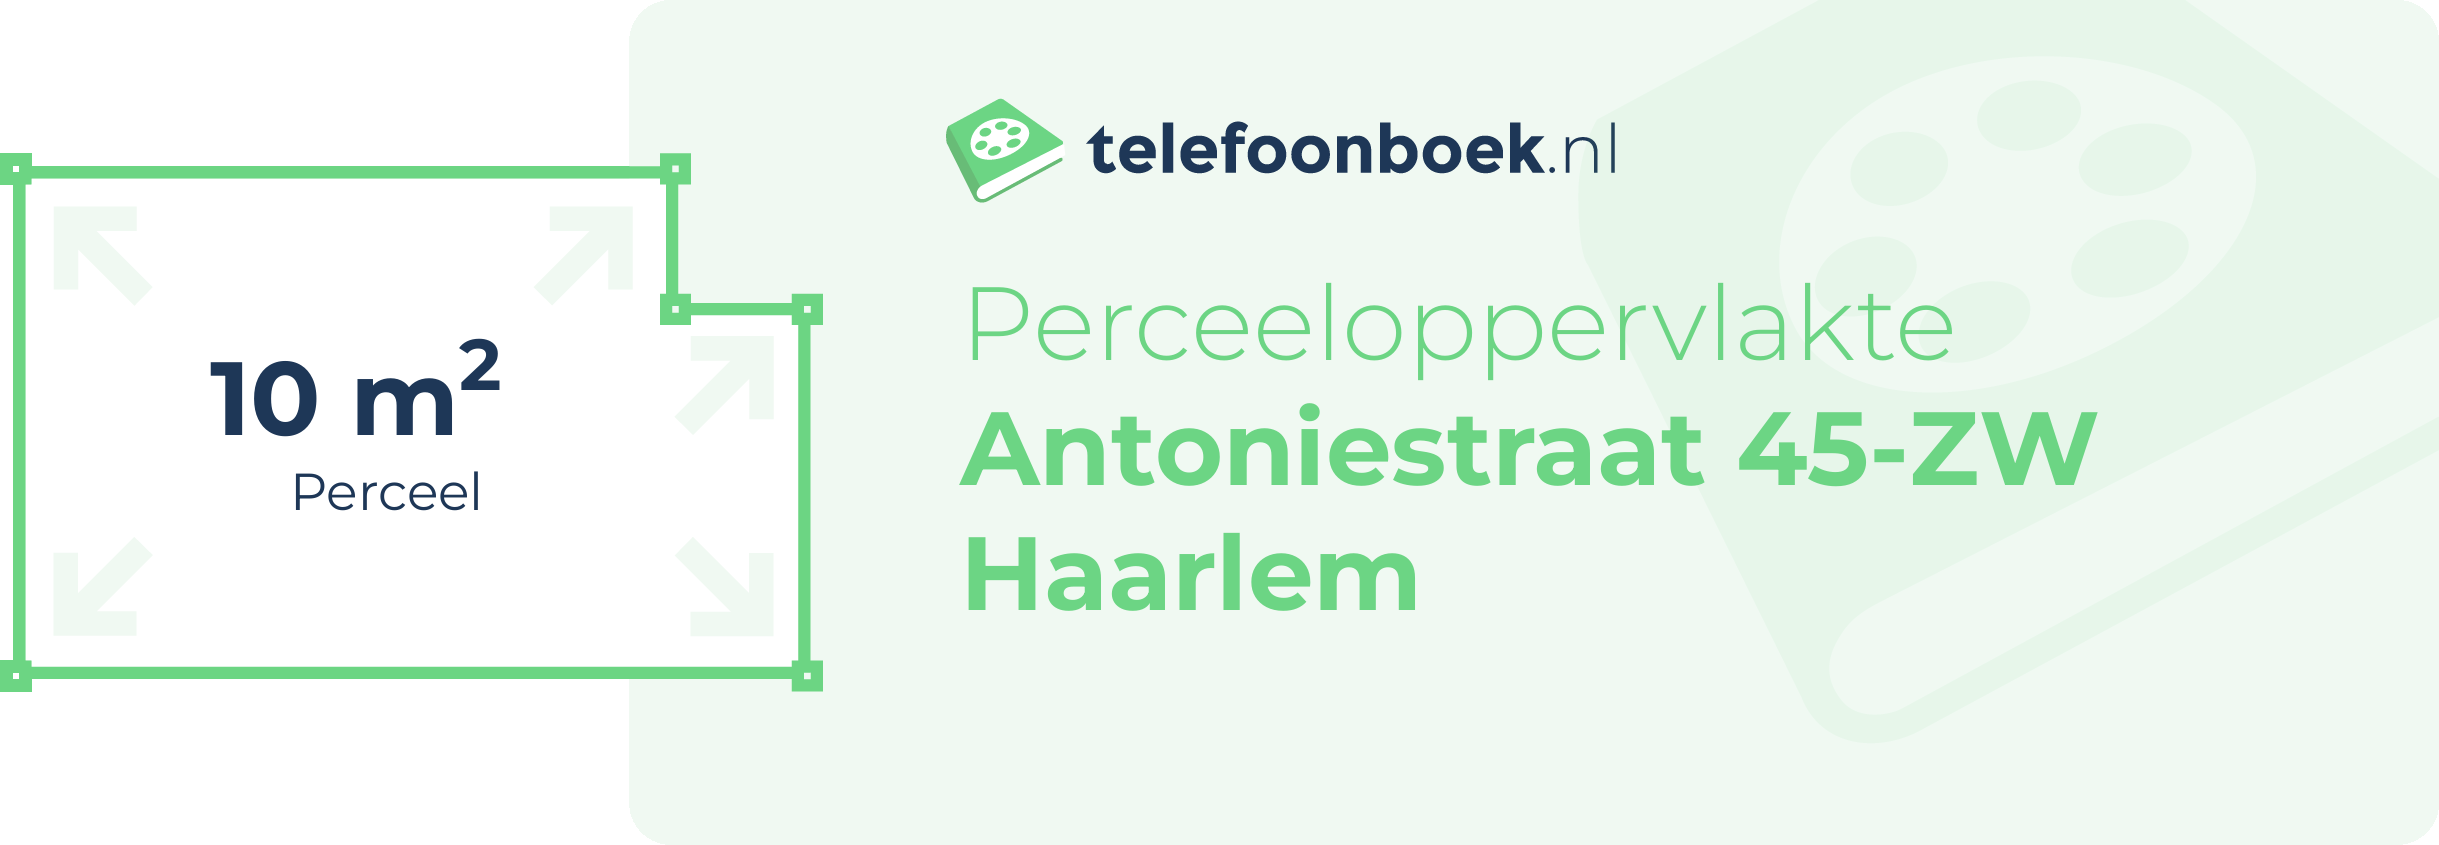 Perceeloppervlakte Antoniestraat 45-ZW Haarlem